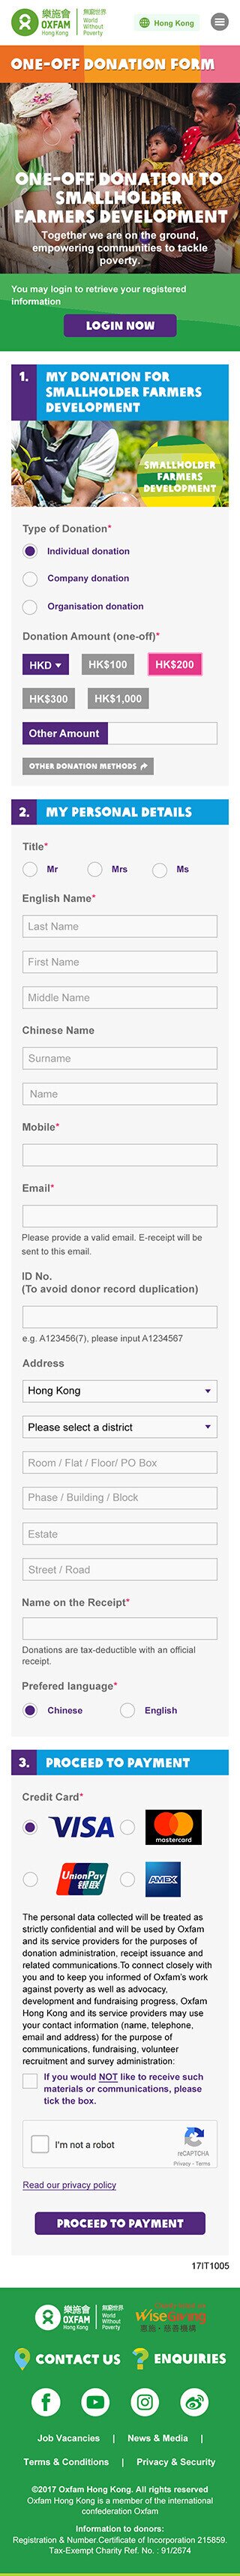 Oxfam Hong Kong Mobile Donation Form